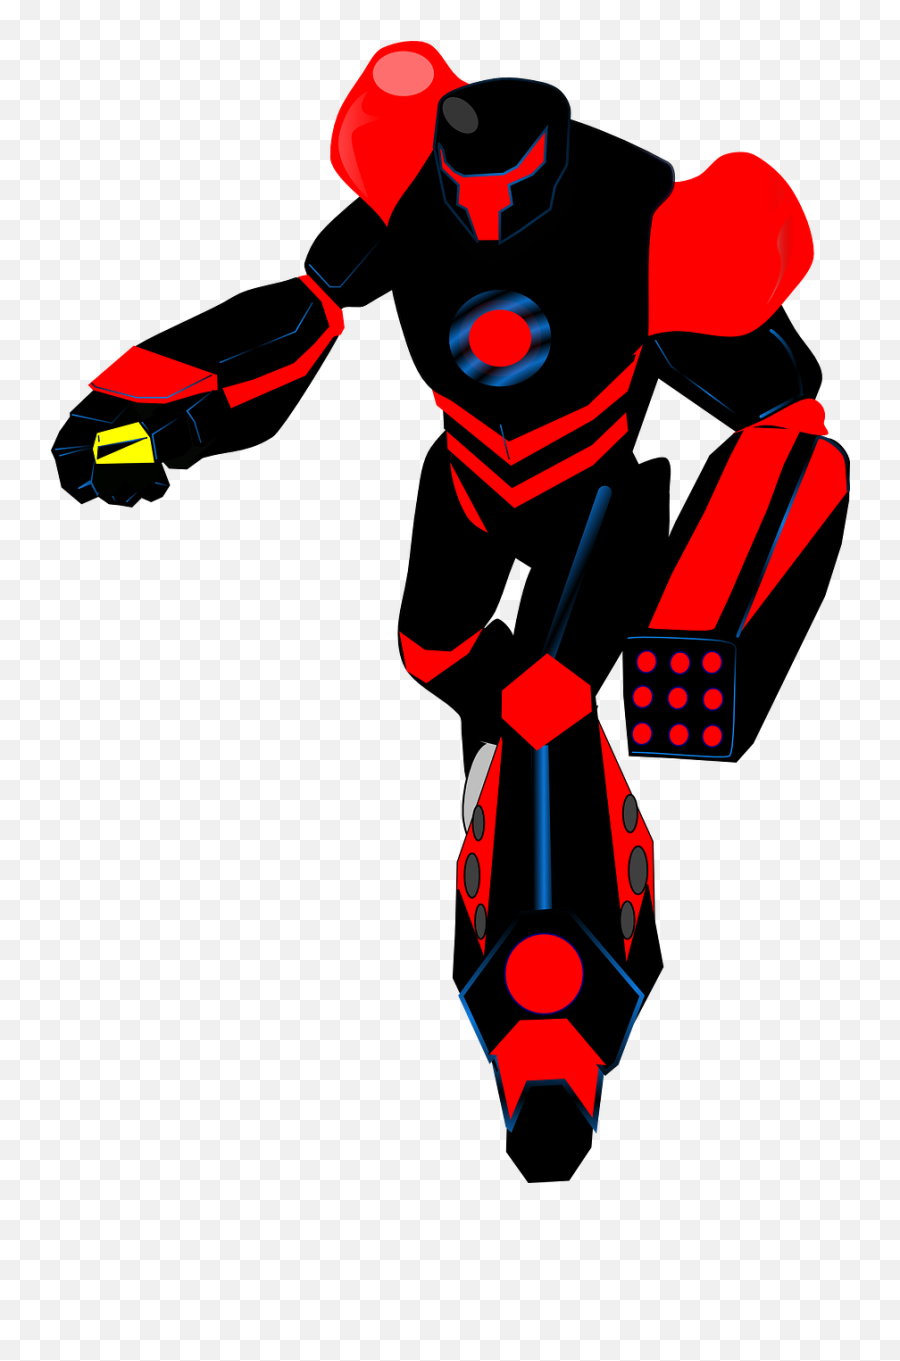 Robot Red Black Transformer Android - Red And Black Robot Emoji,Star Wars Emoji For Android